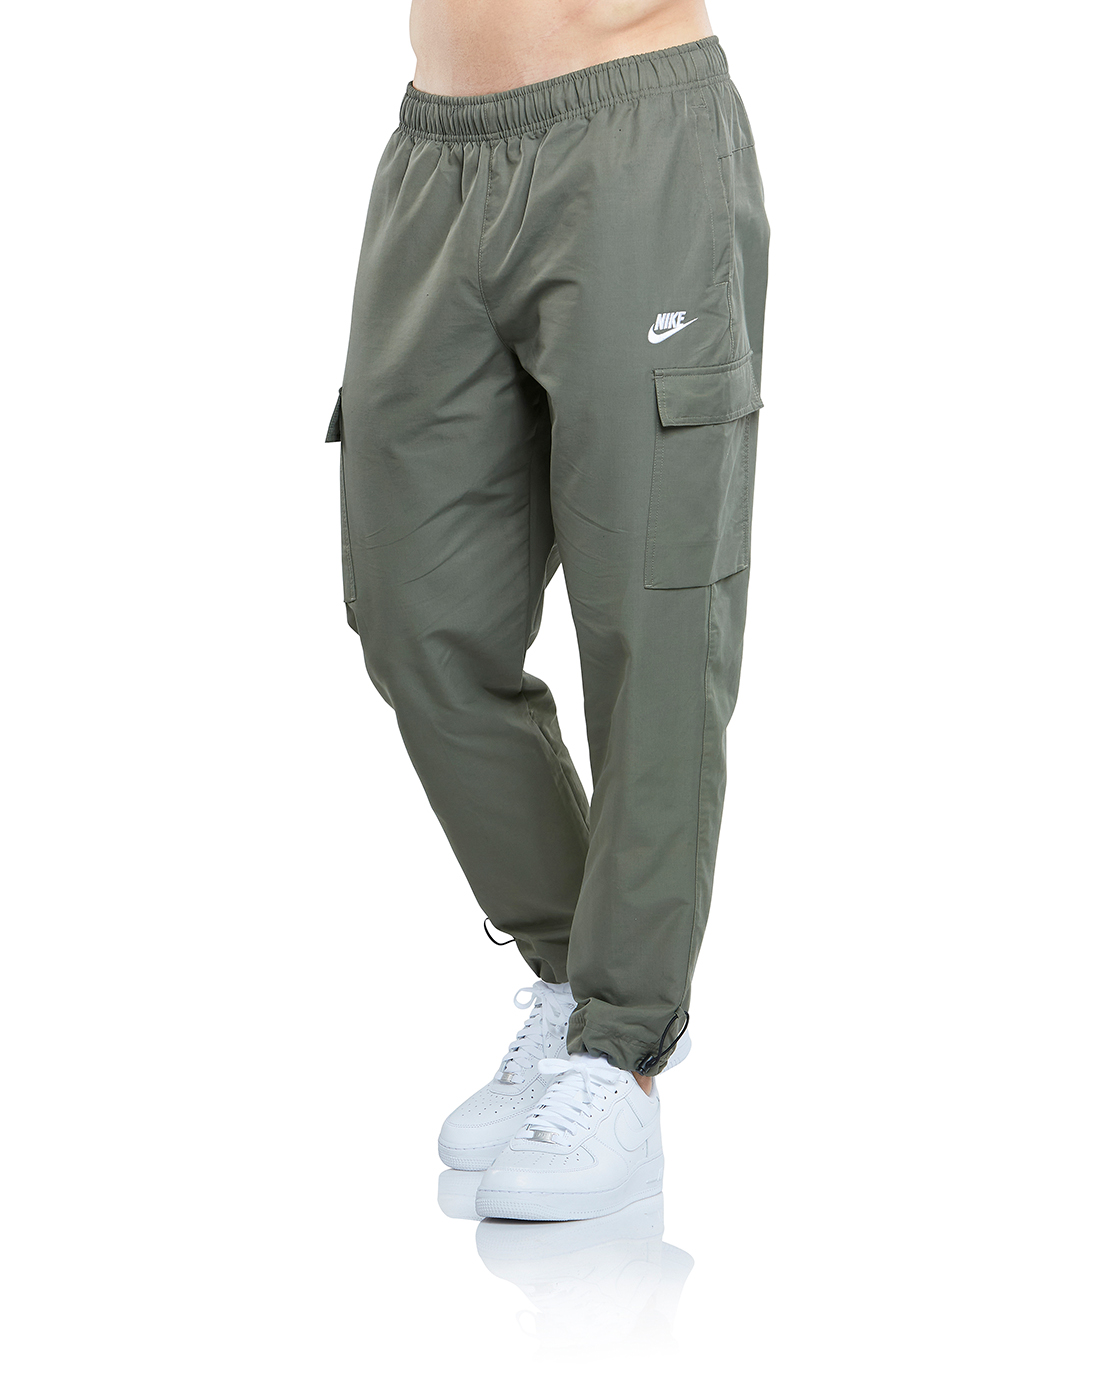 Nike Mens Woven Cargo Pants - Green 